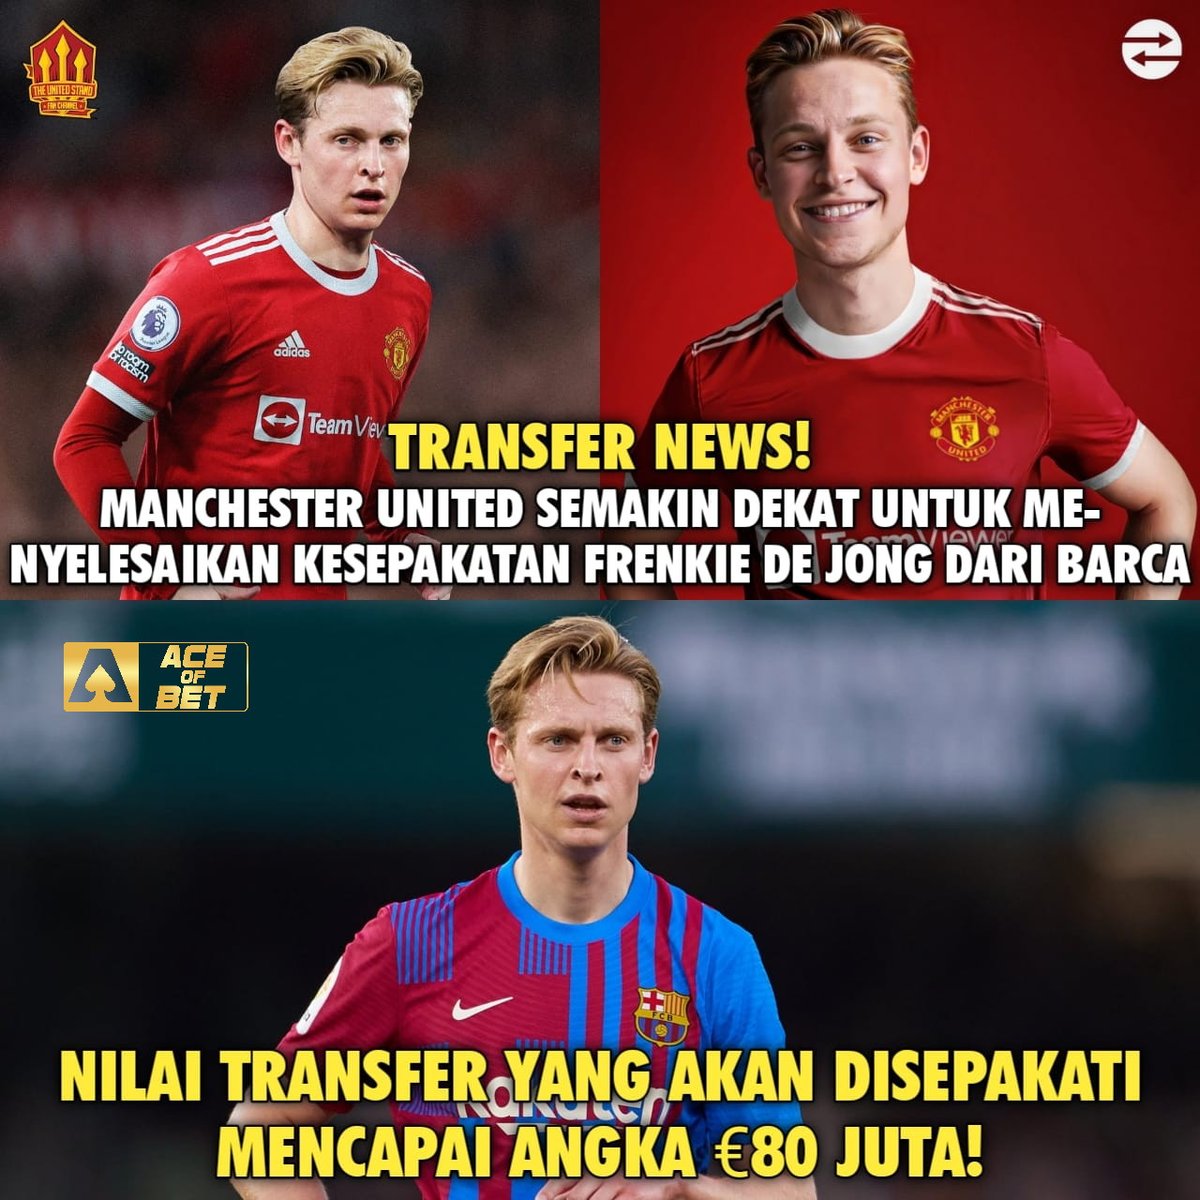 Coming soon: Frenkie de Jong bakal gabung ke Manchester United. Keputusan yang tepat? 🤔